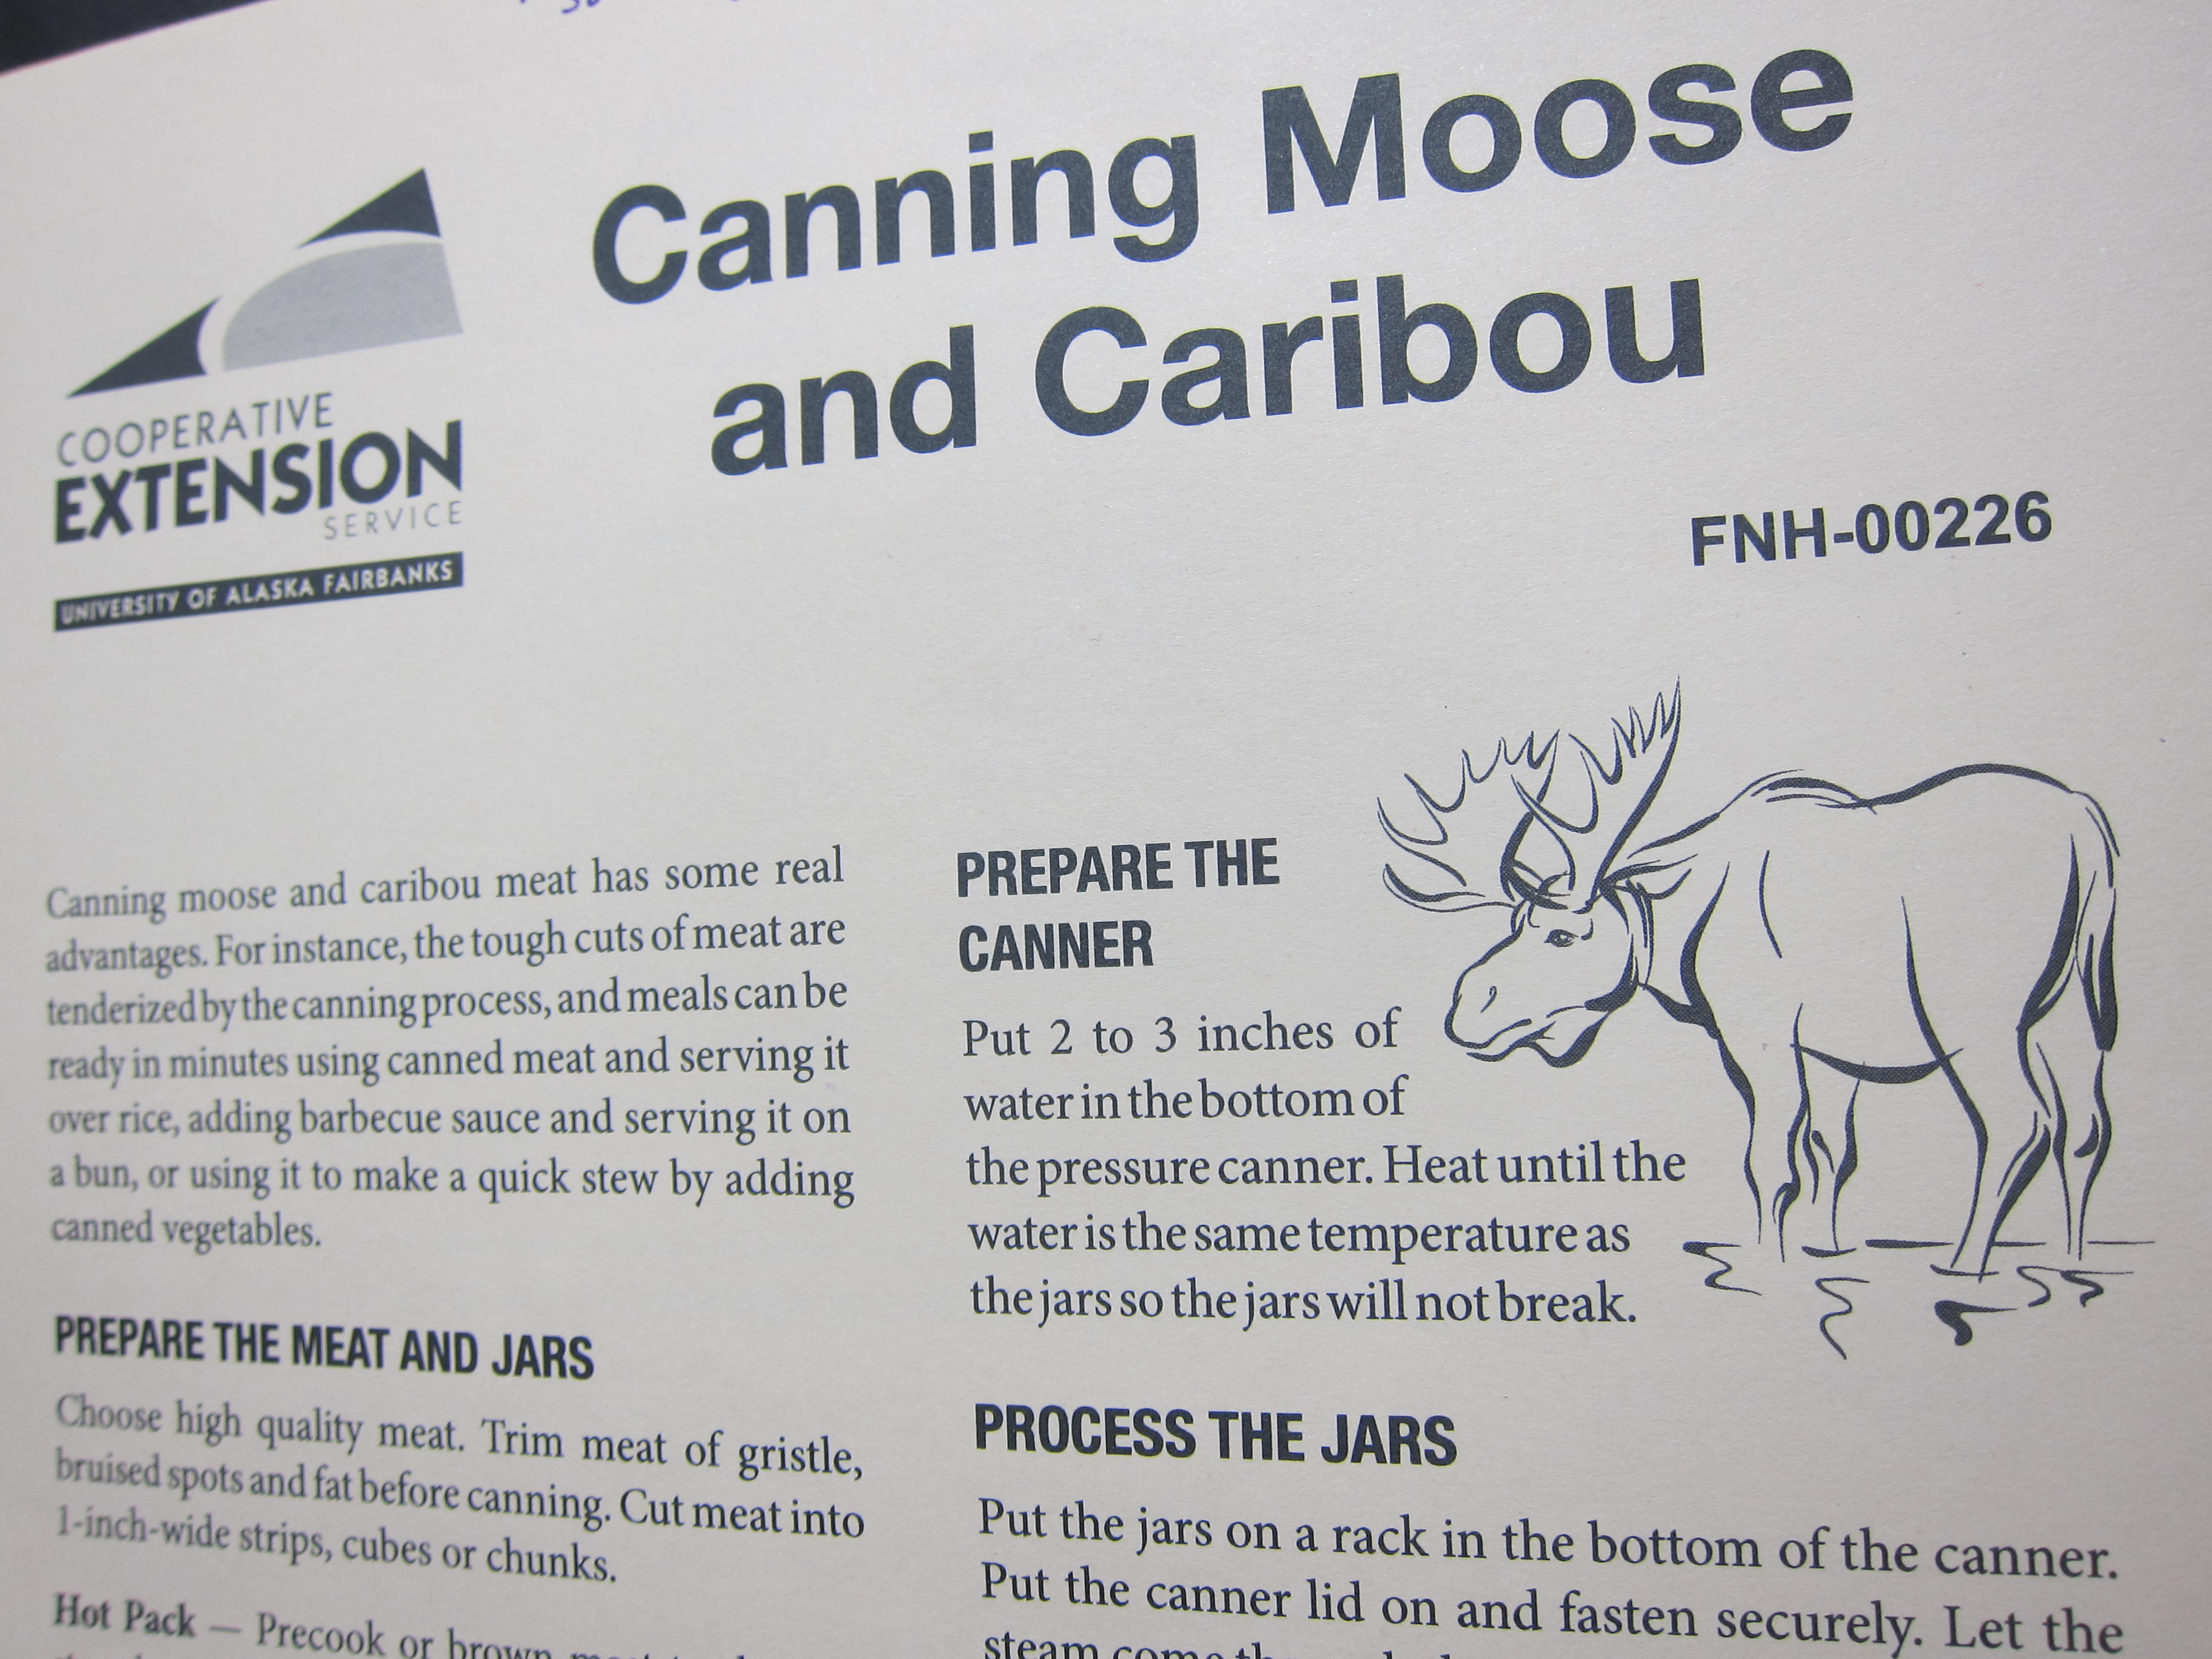 UAF Canning Moose and Caribou Guide